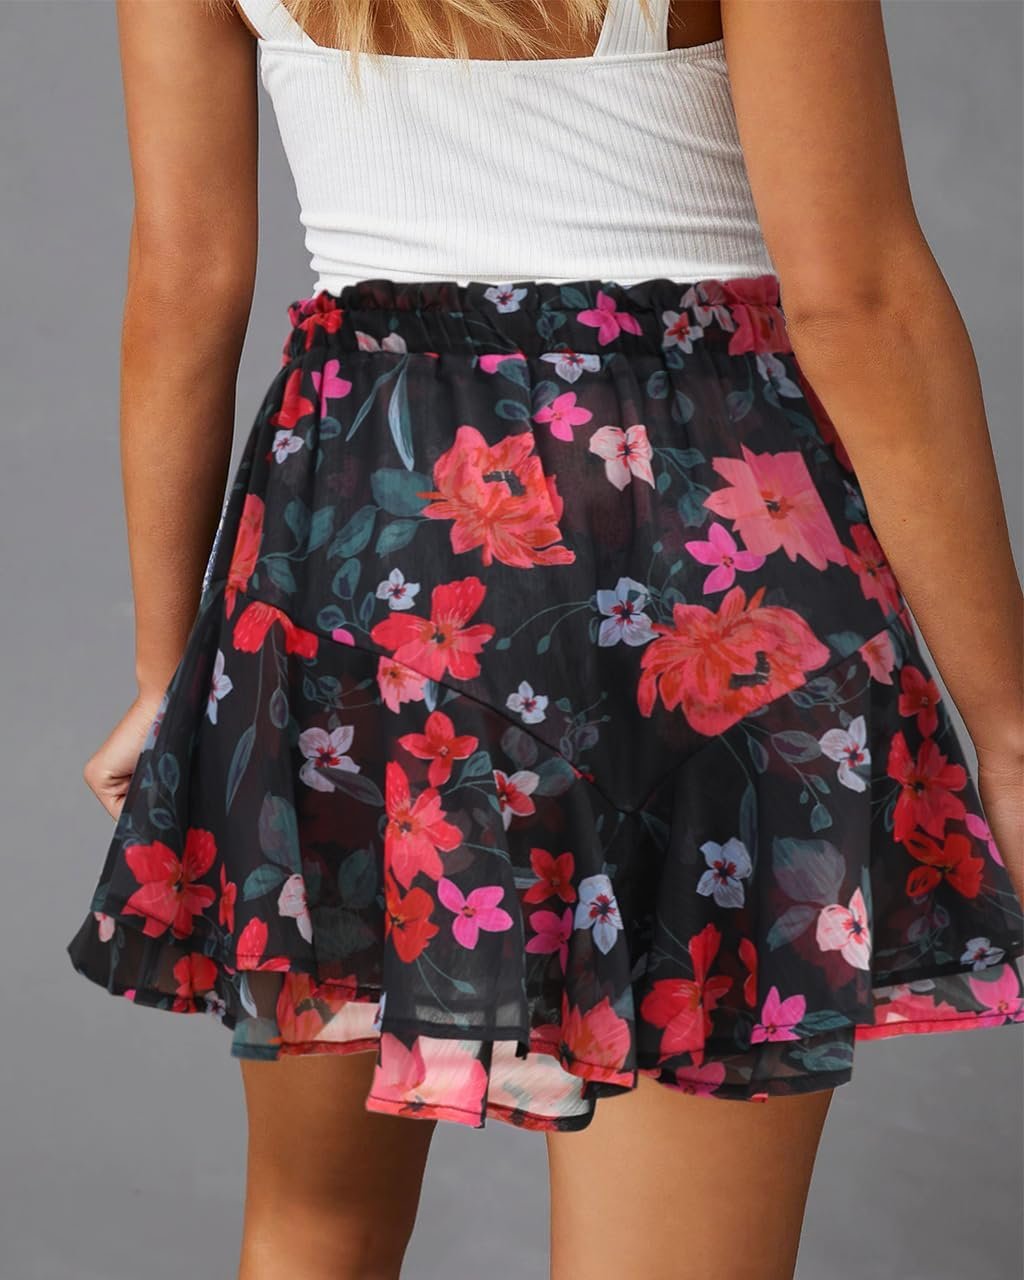 Flowy Shorts for Women Casual Boho Floral Skorts Ruffle Mini Skirts Running Tennis Butterfly Shorts Chiffon Shorts